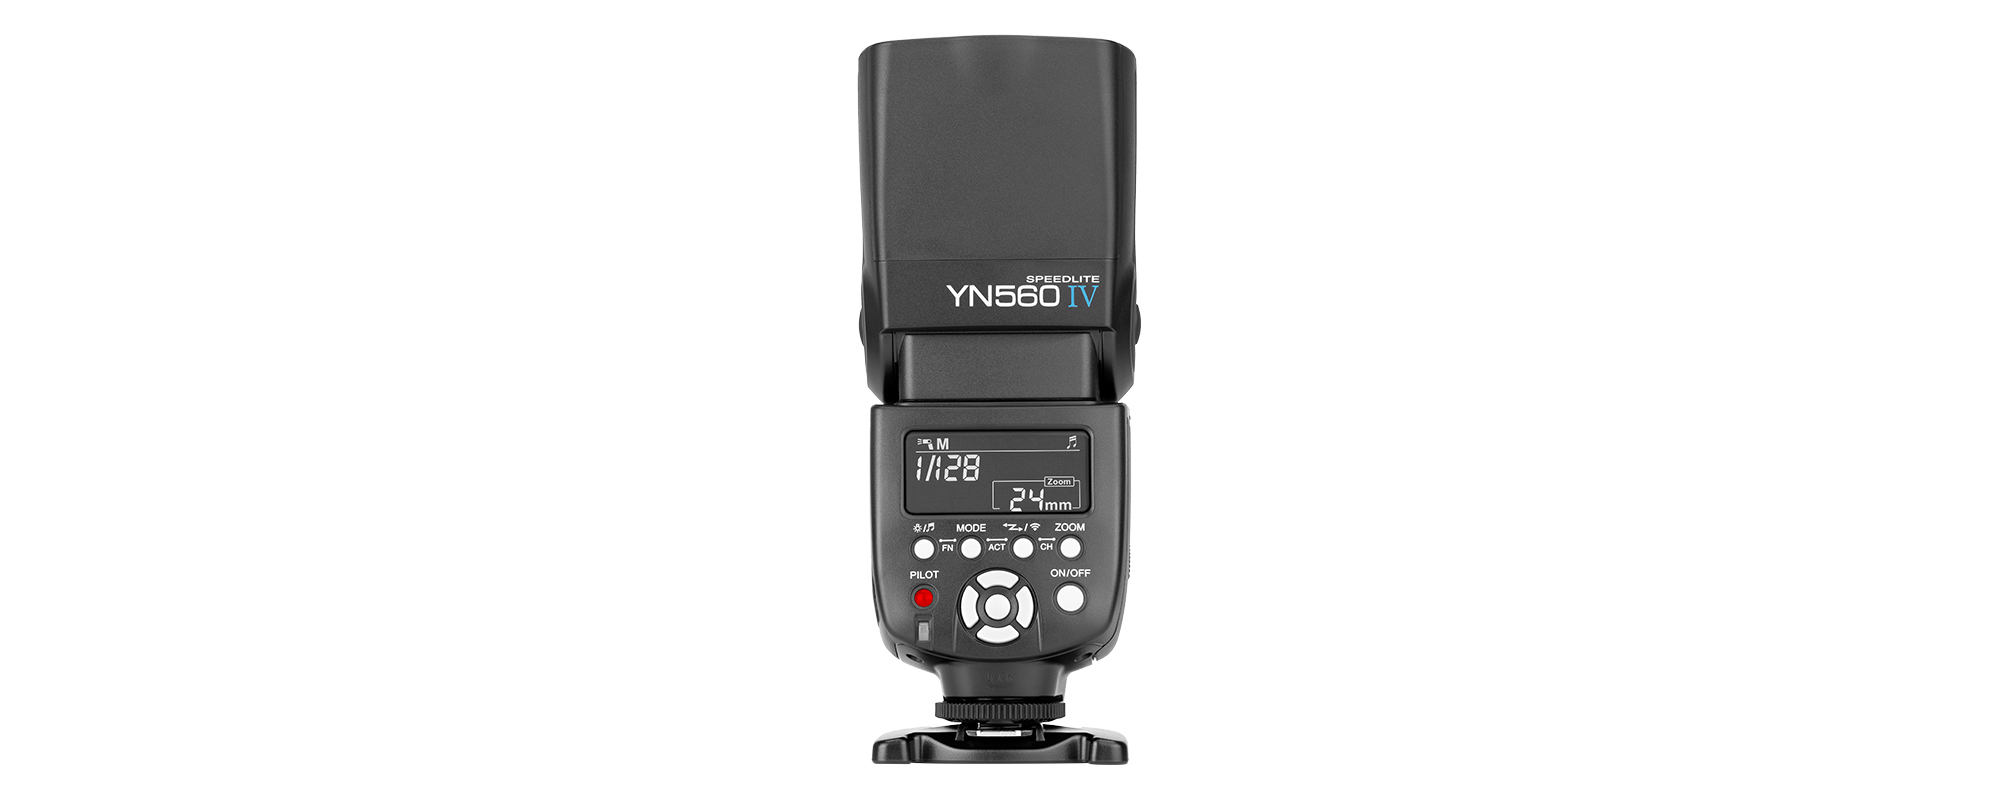 Yongnuo YN560 IV Negativ-Display-Blitzgerät - Neues Display